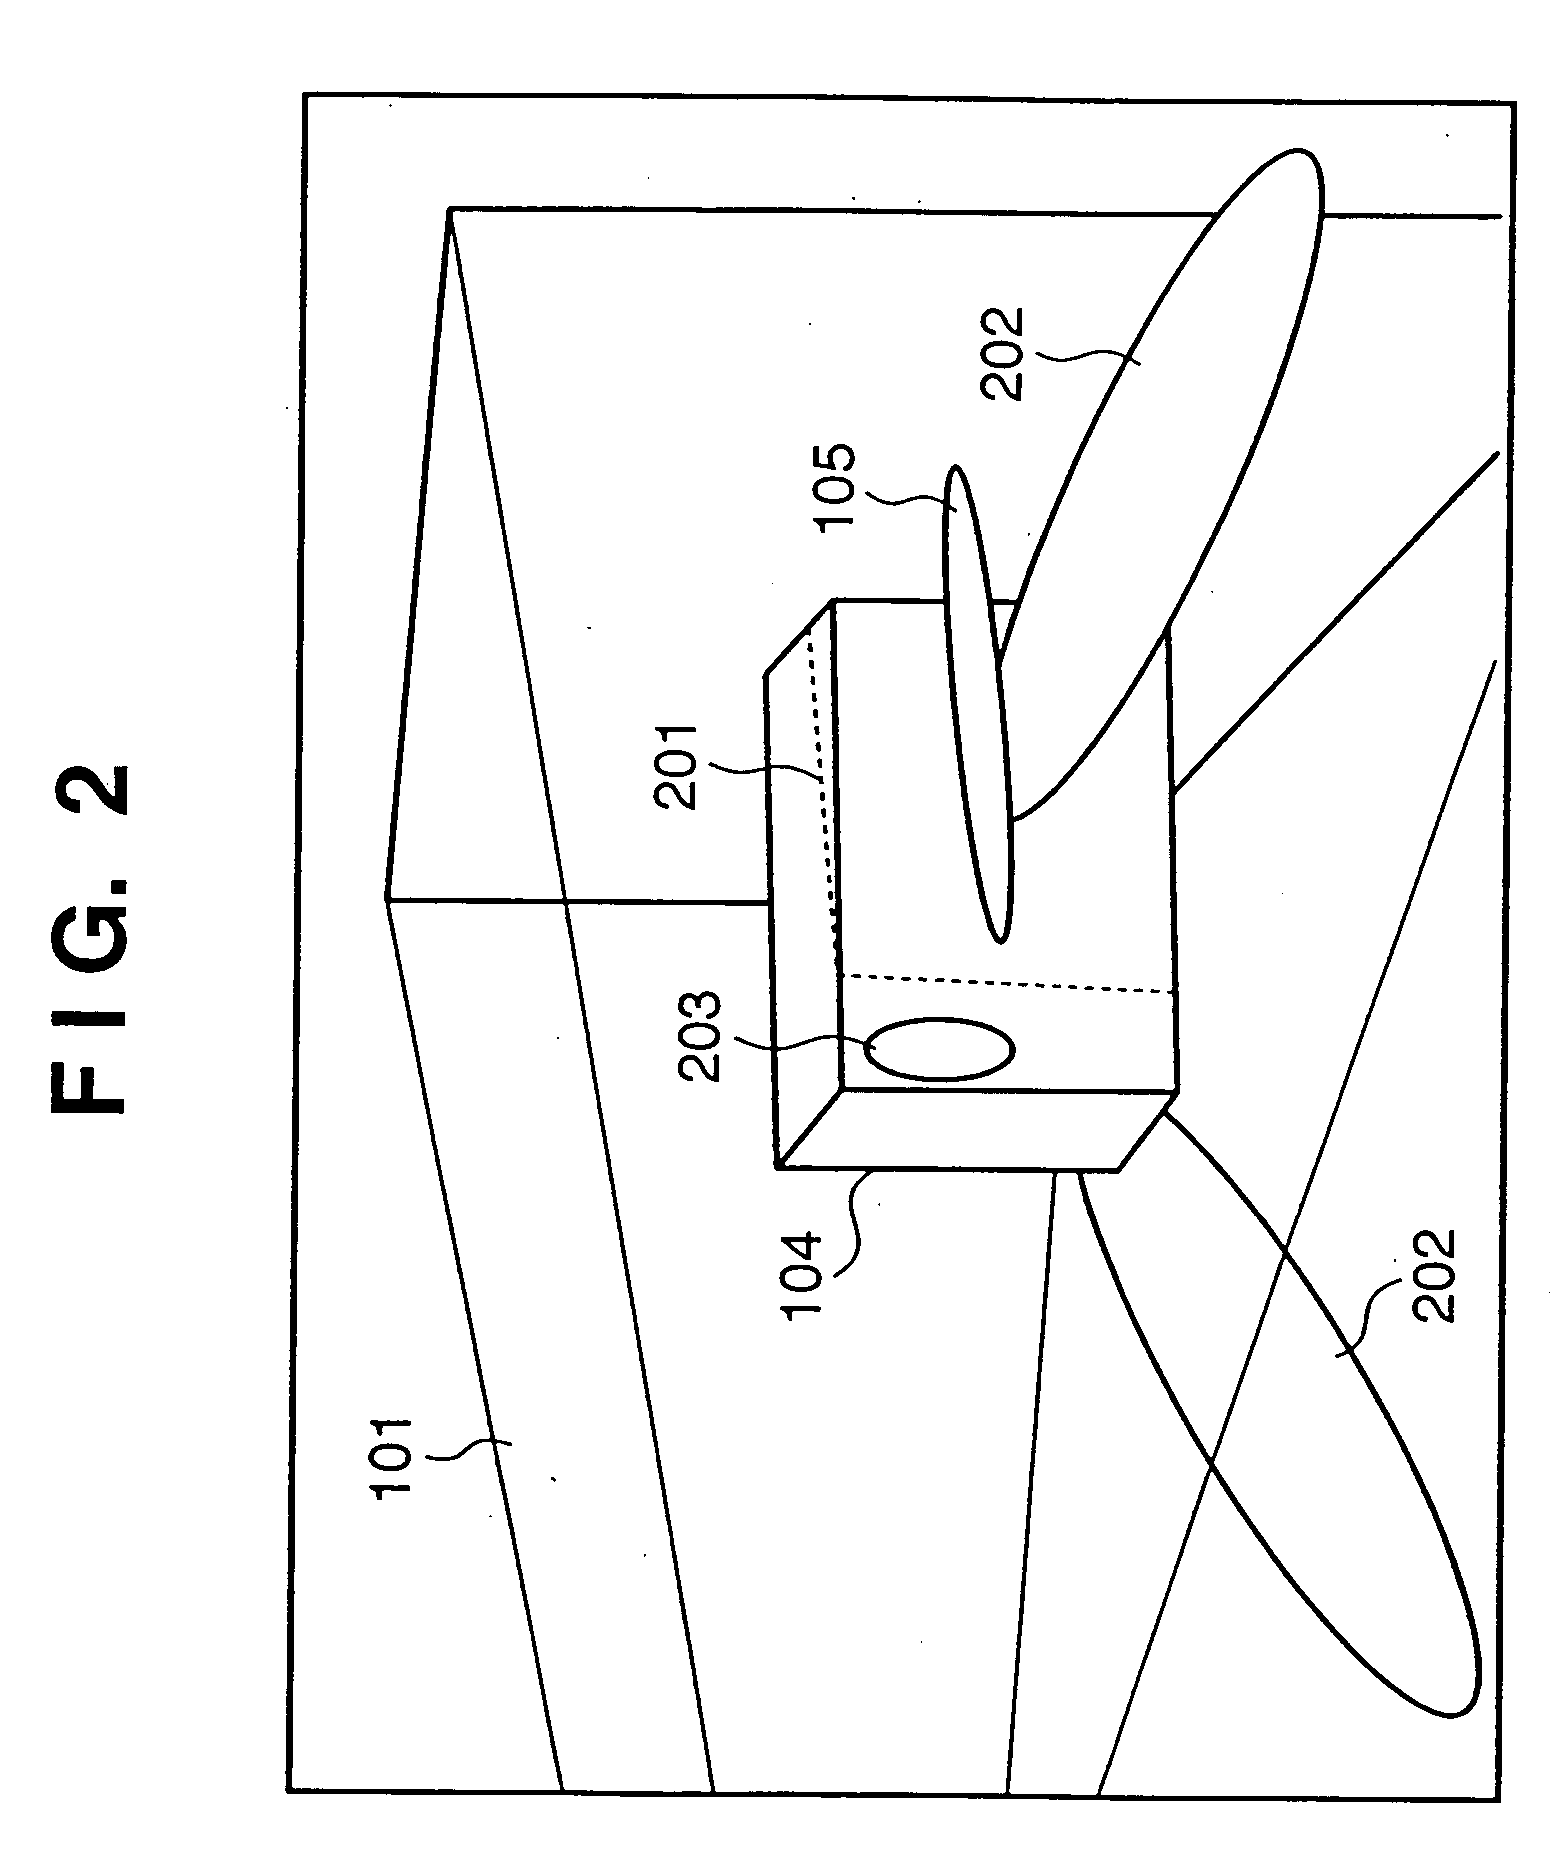 Image displaying method and apparatus